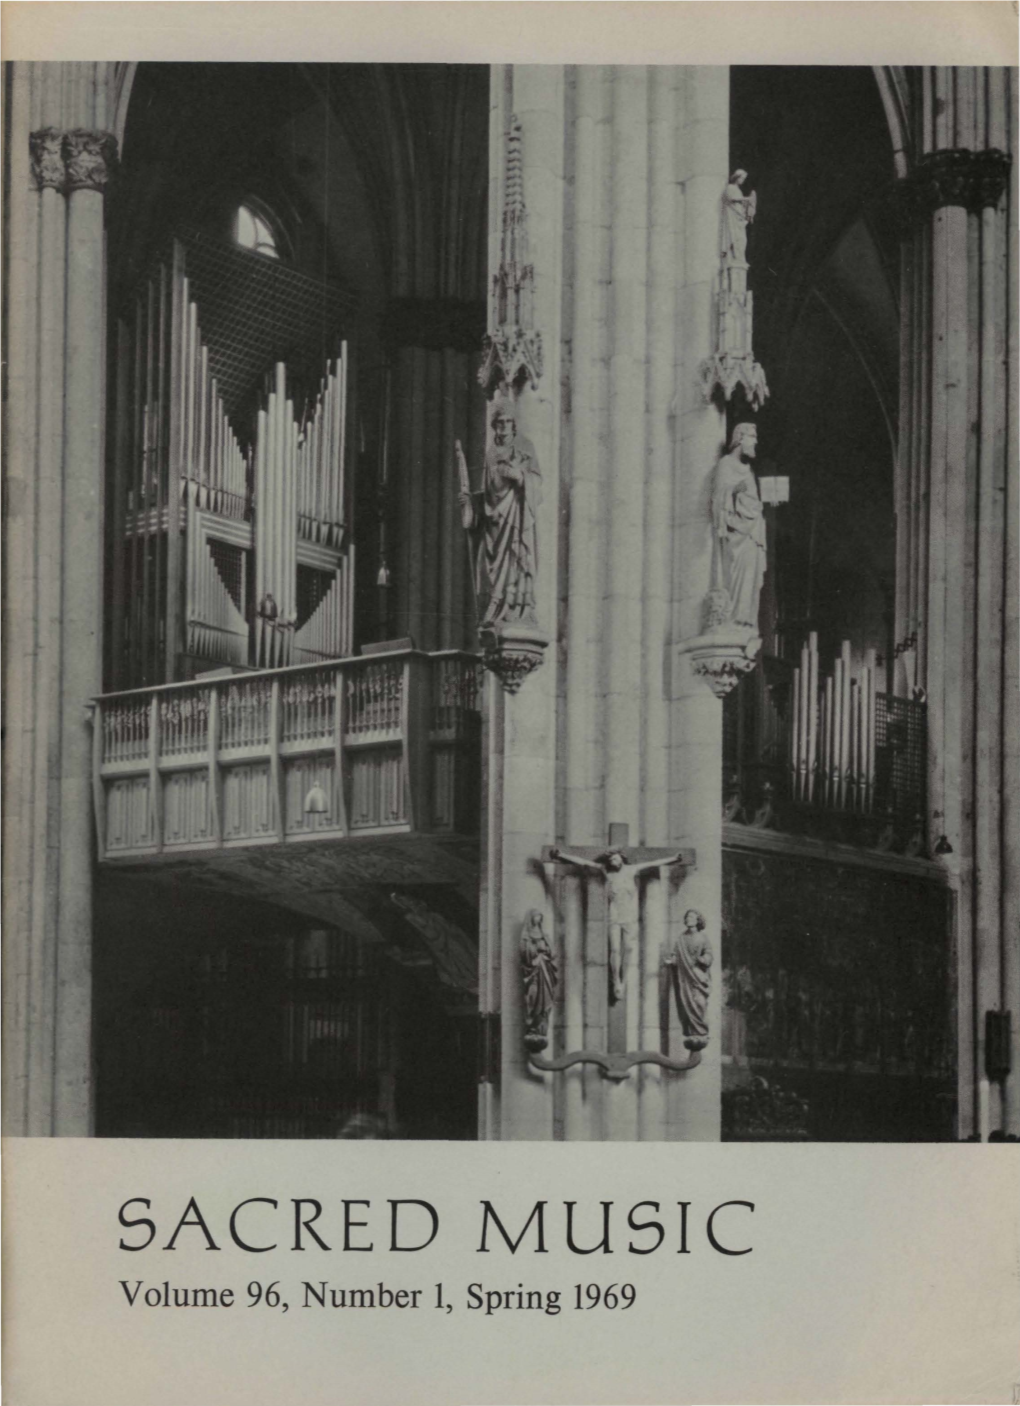 SACRED MUSIC Volume 96, Number 1, Spring 1969